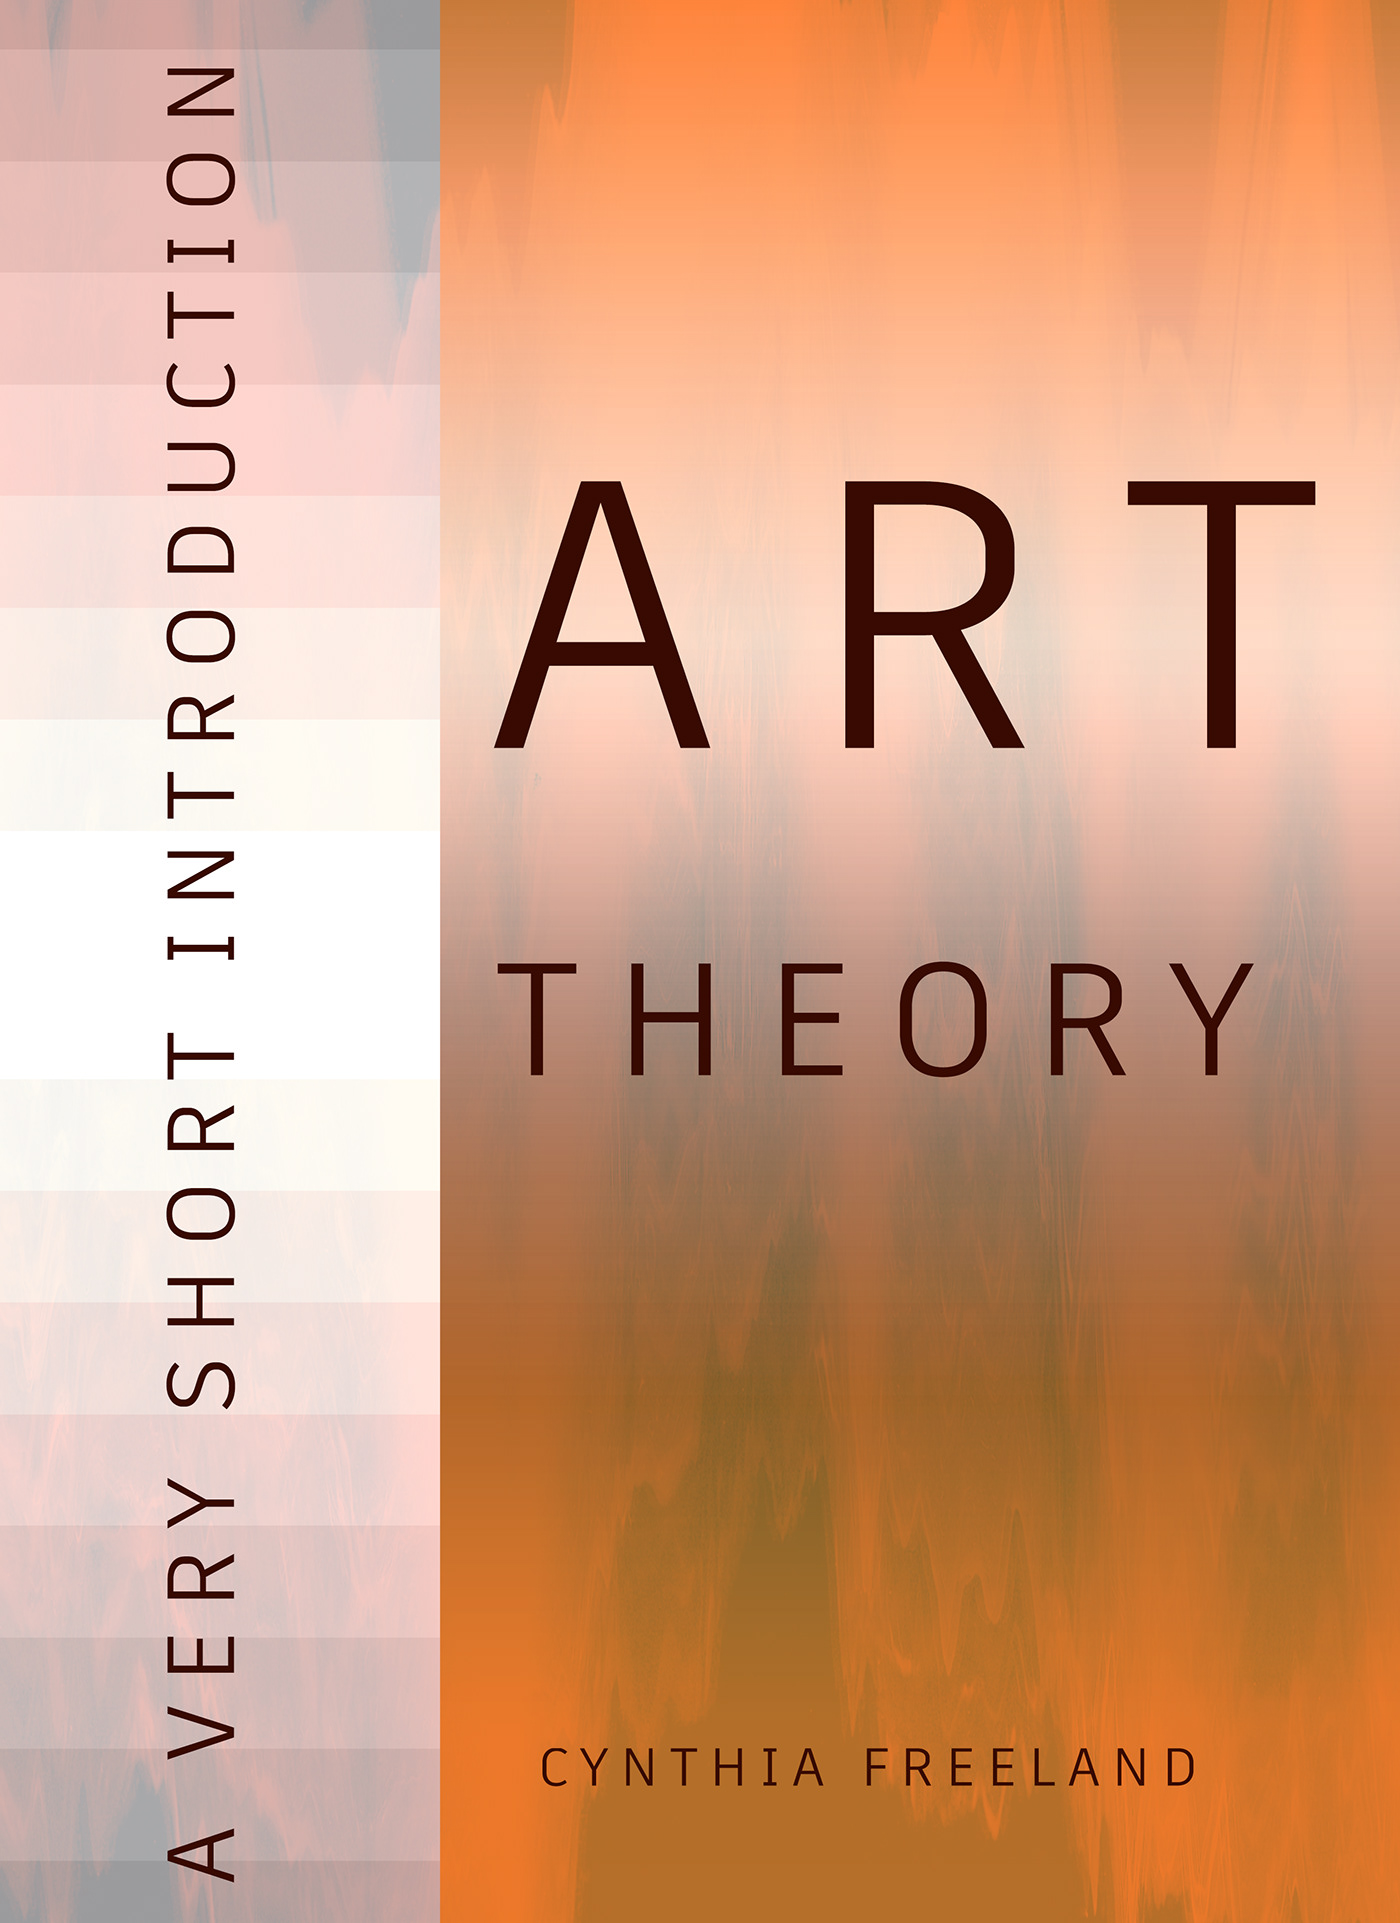 Book Cover Design covers cover design book cover design Graphic Designer art theory